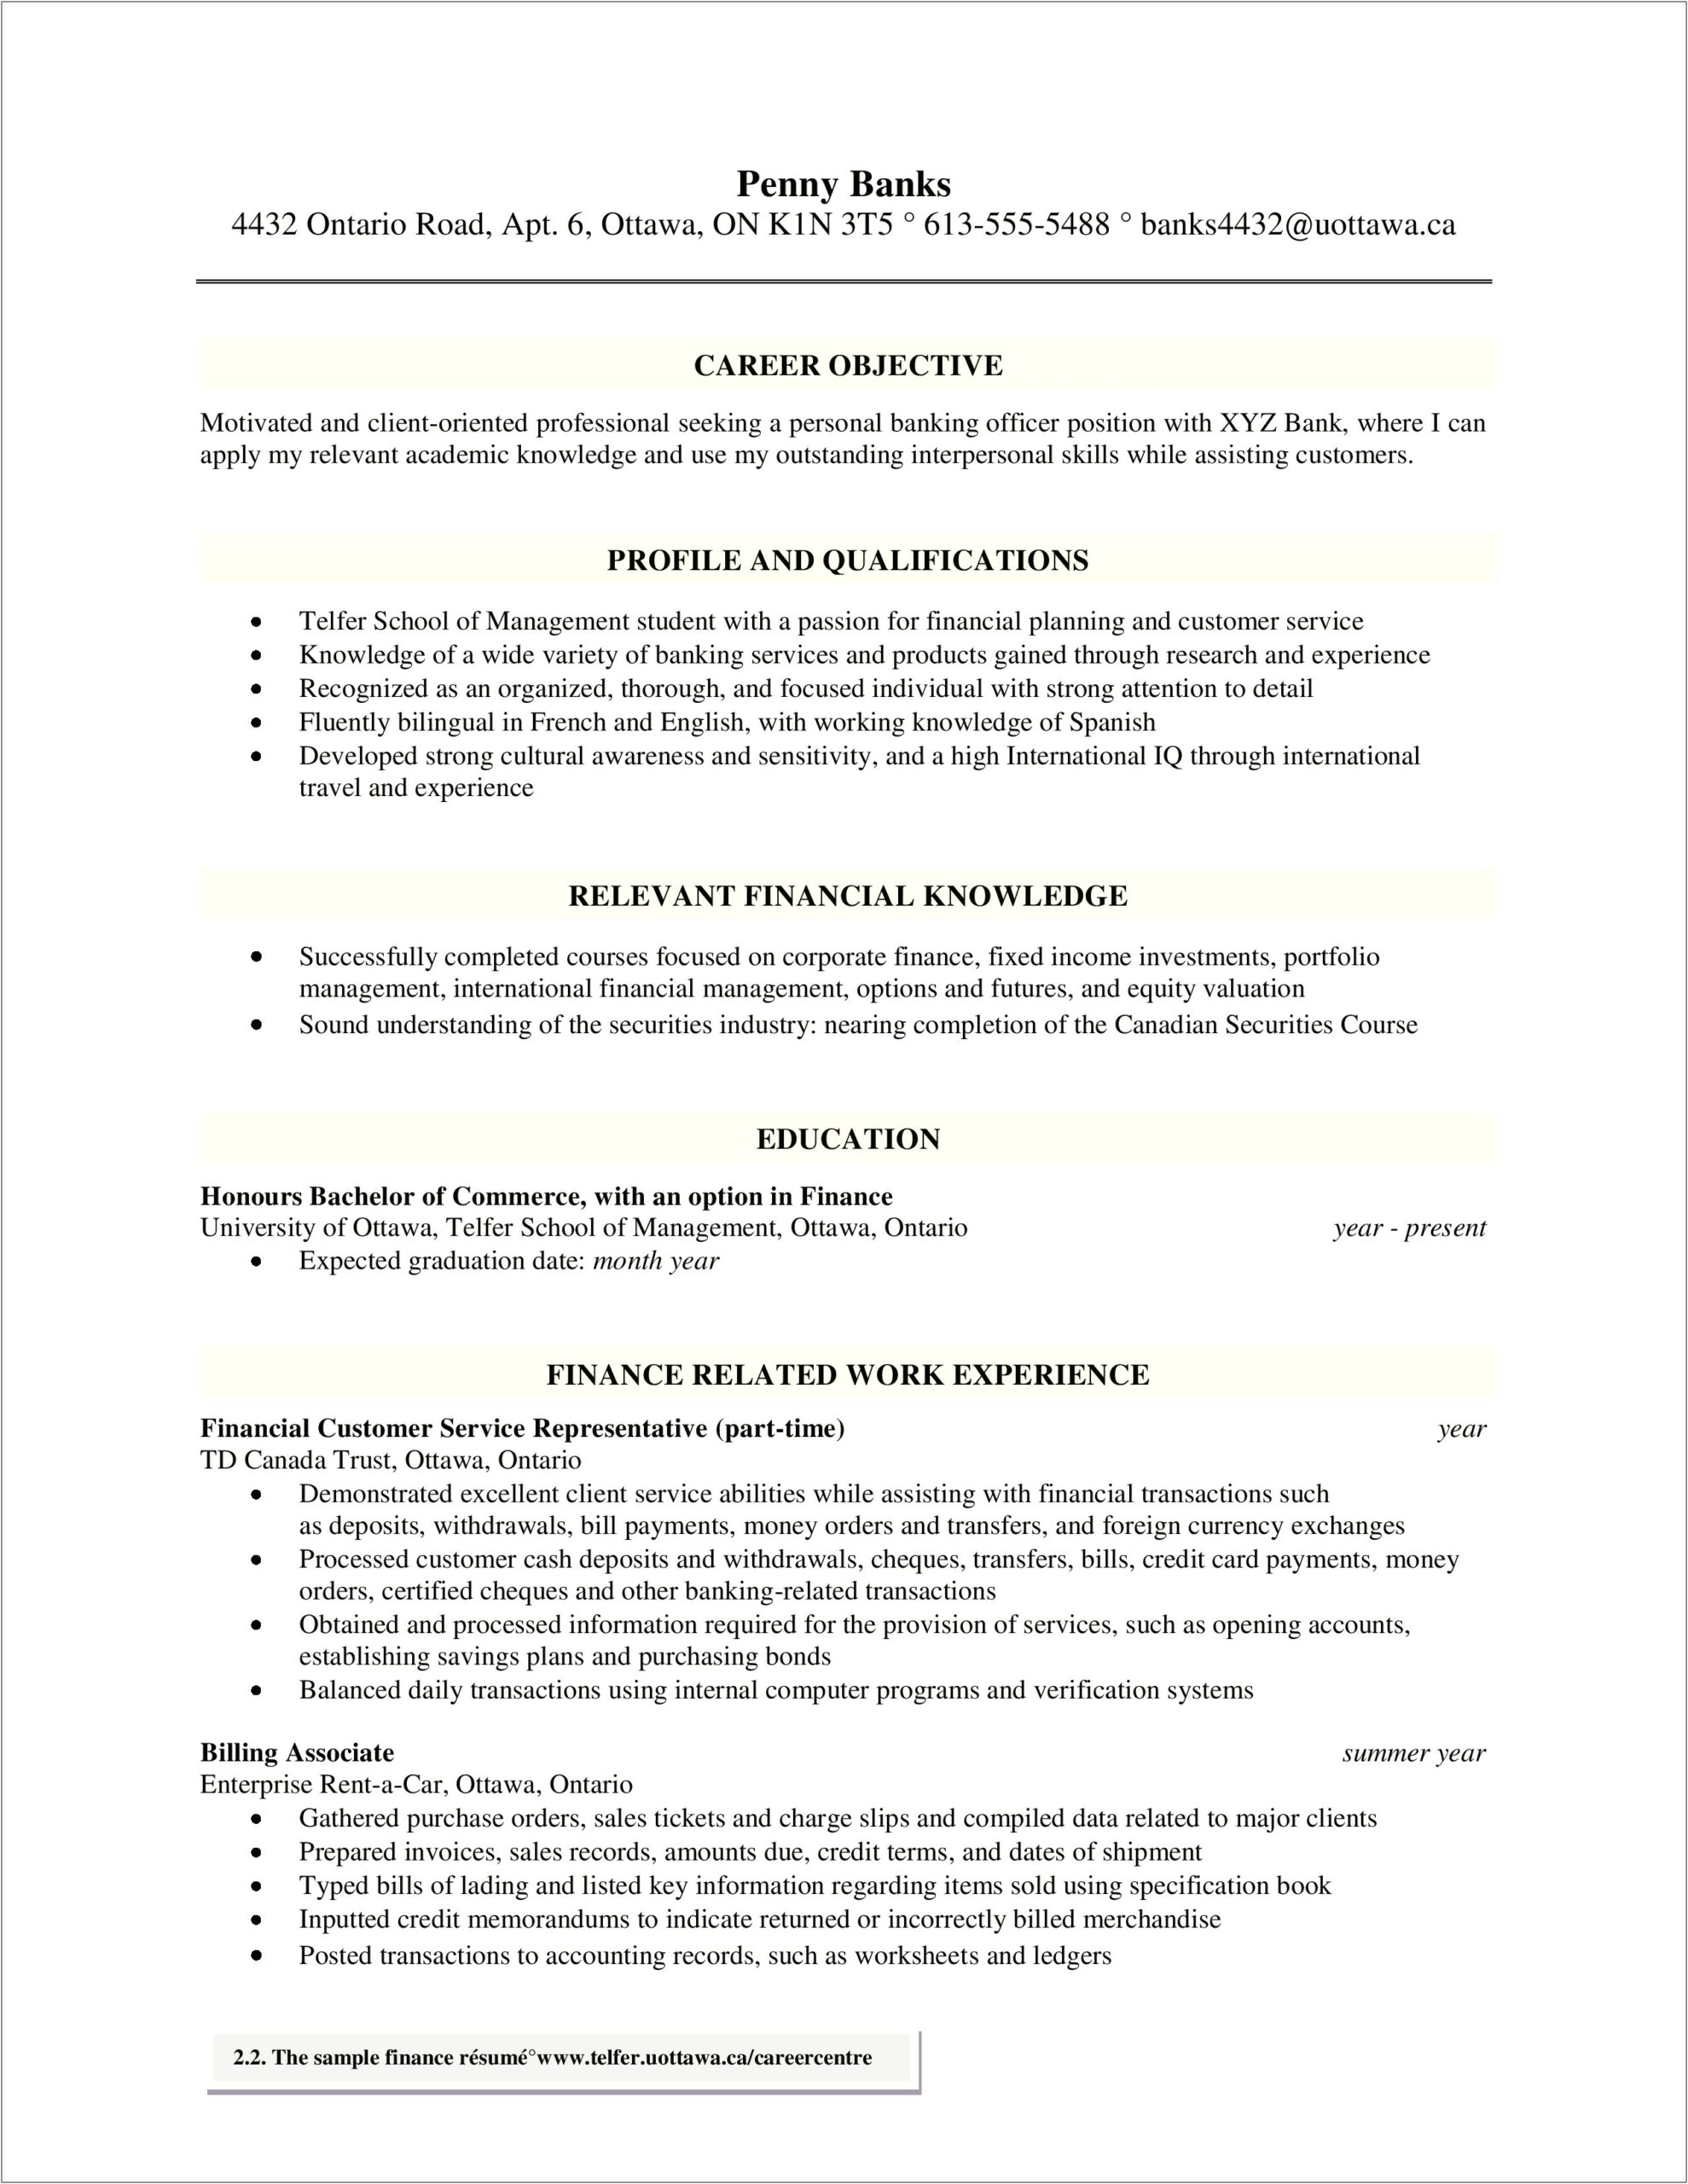 Bank Representative Job Description For Resume